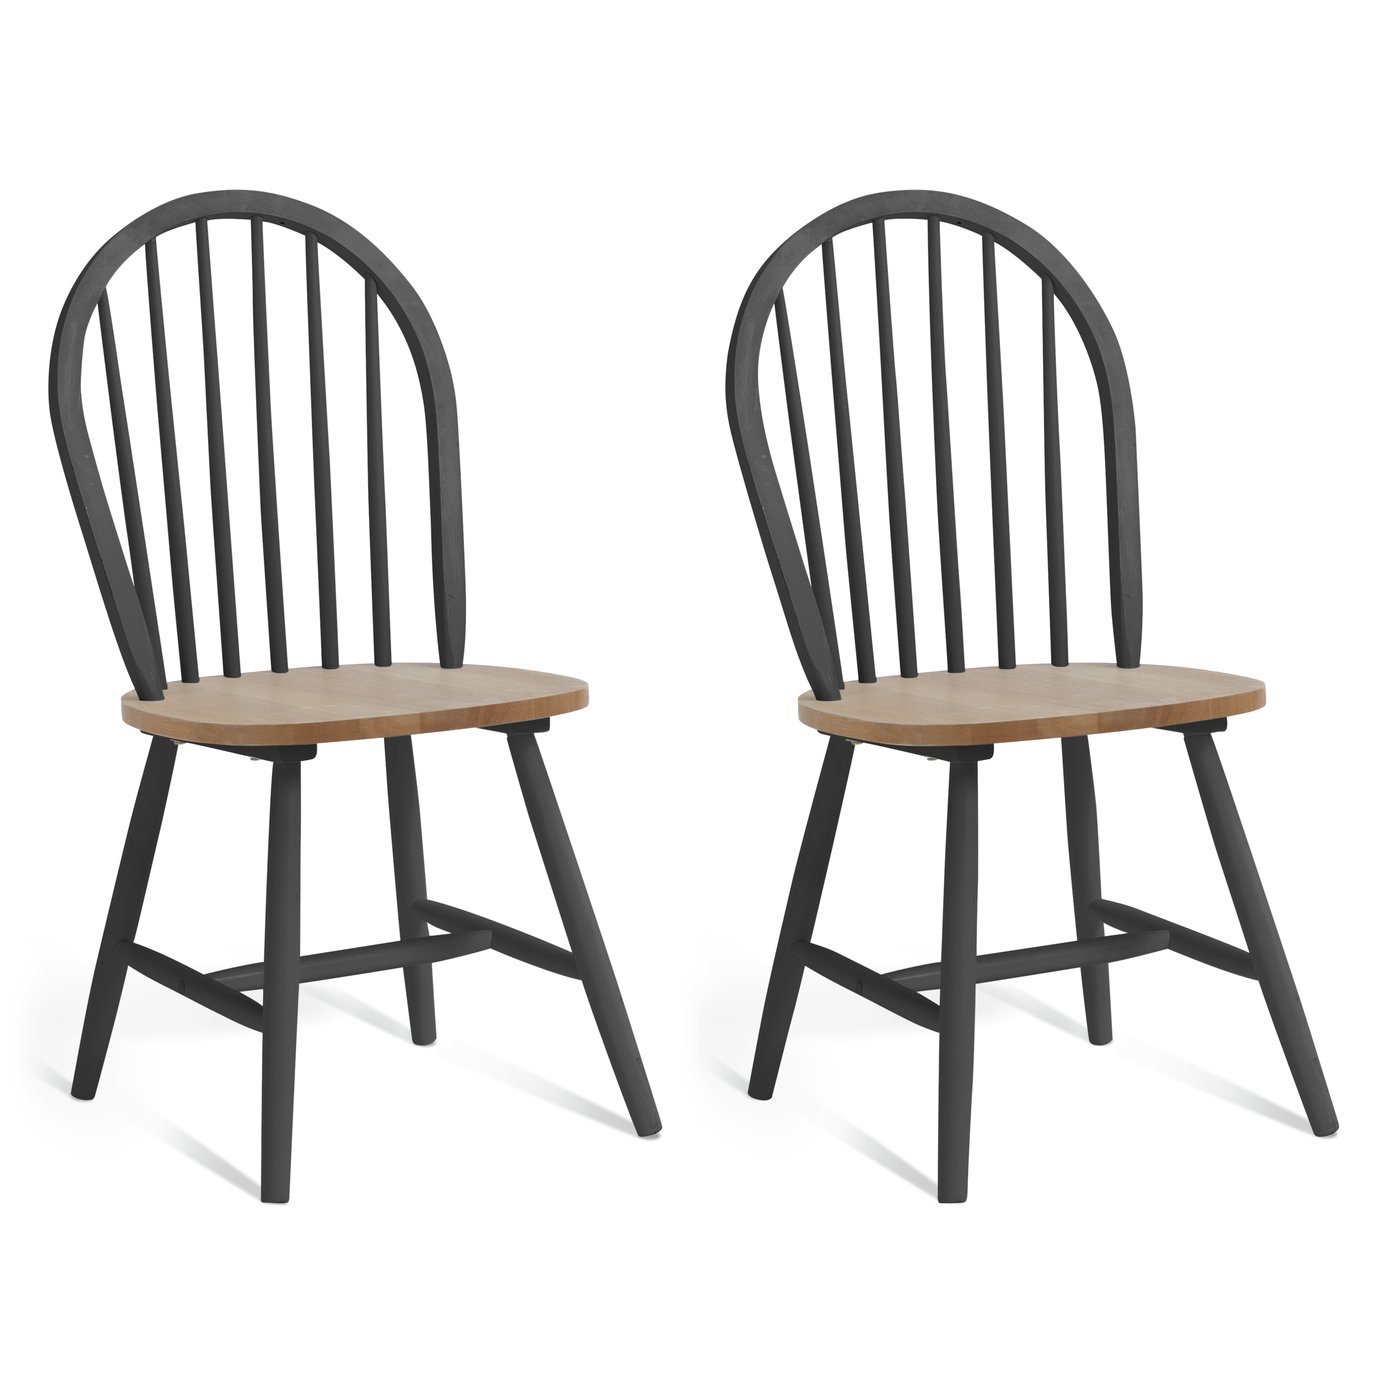 Habitat Burford Pair of Solid Wood Dining Chairs - Dark Grey